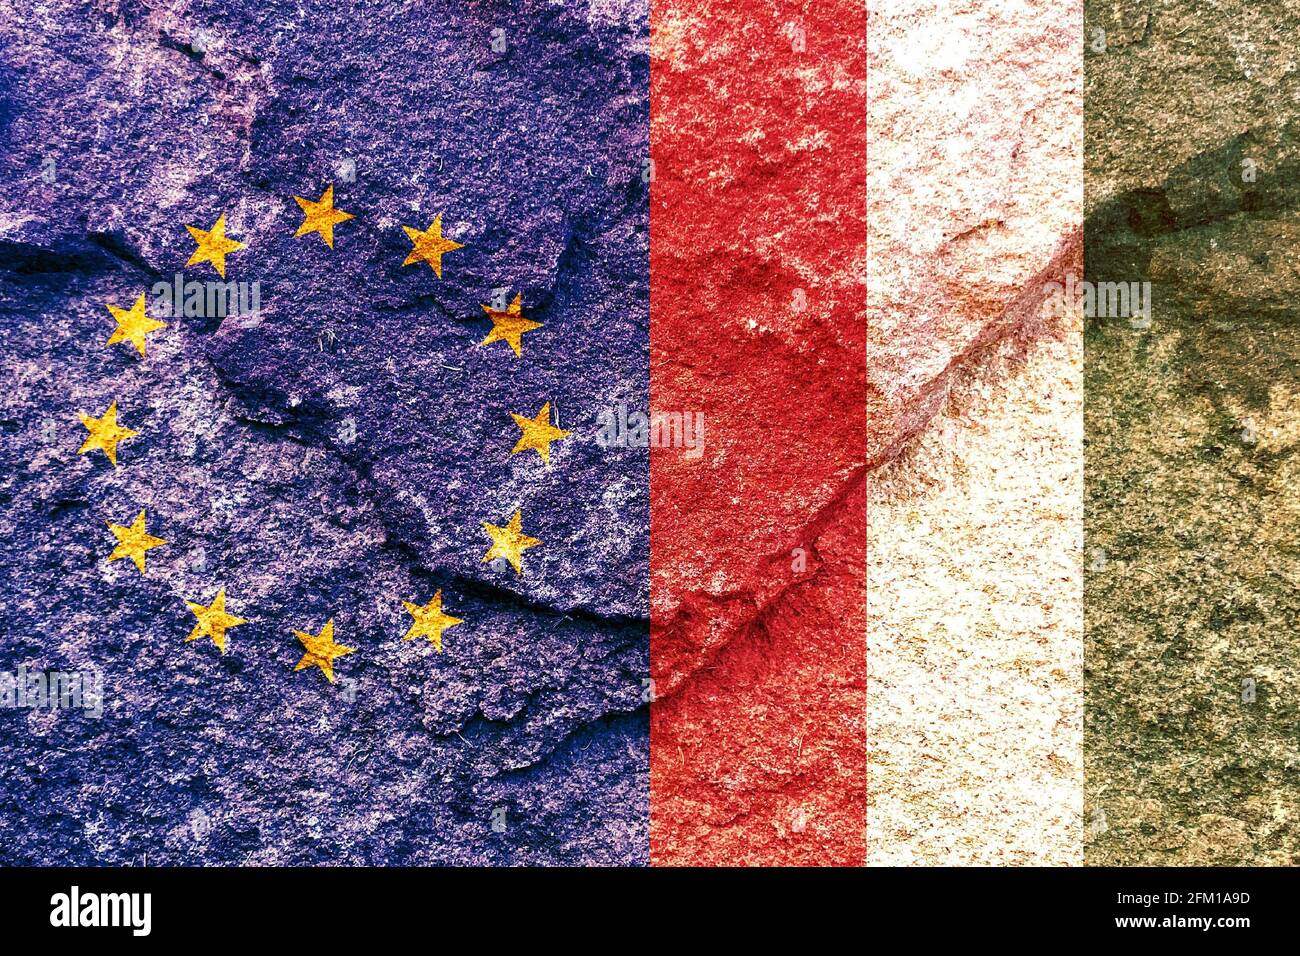 EU flag and Hungary flag on a rock wall background Stock Photo